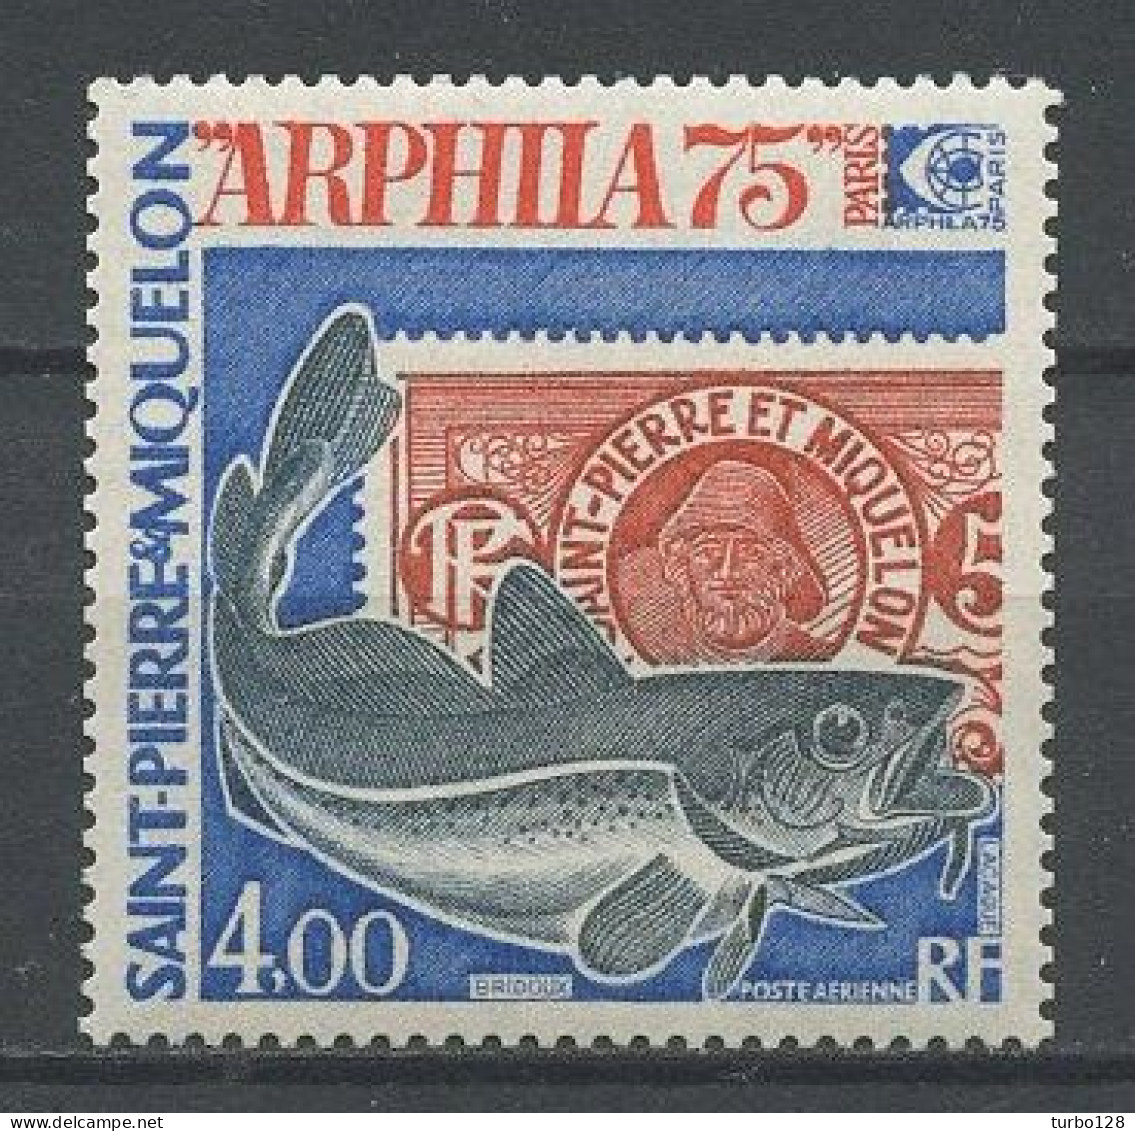 SPM MIQUELON 1975 PA N° 60 ** Neuf MNH Superbe C 25,20 € ARPHILA 75 Poissons Fishes Animaux Exposition Philatélique - Nuevos